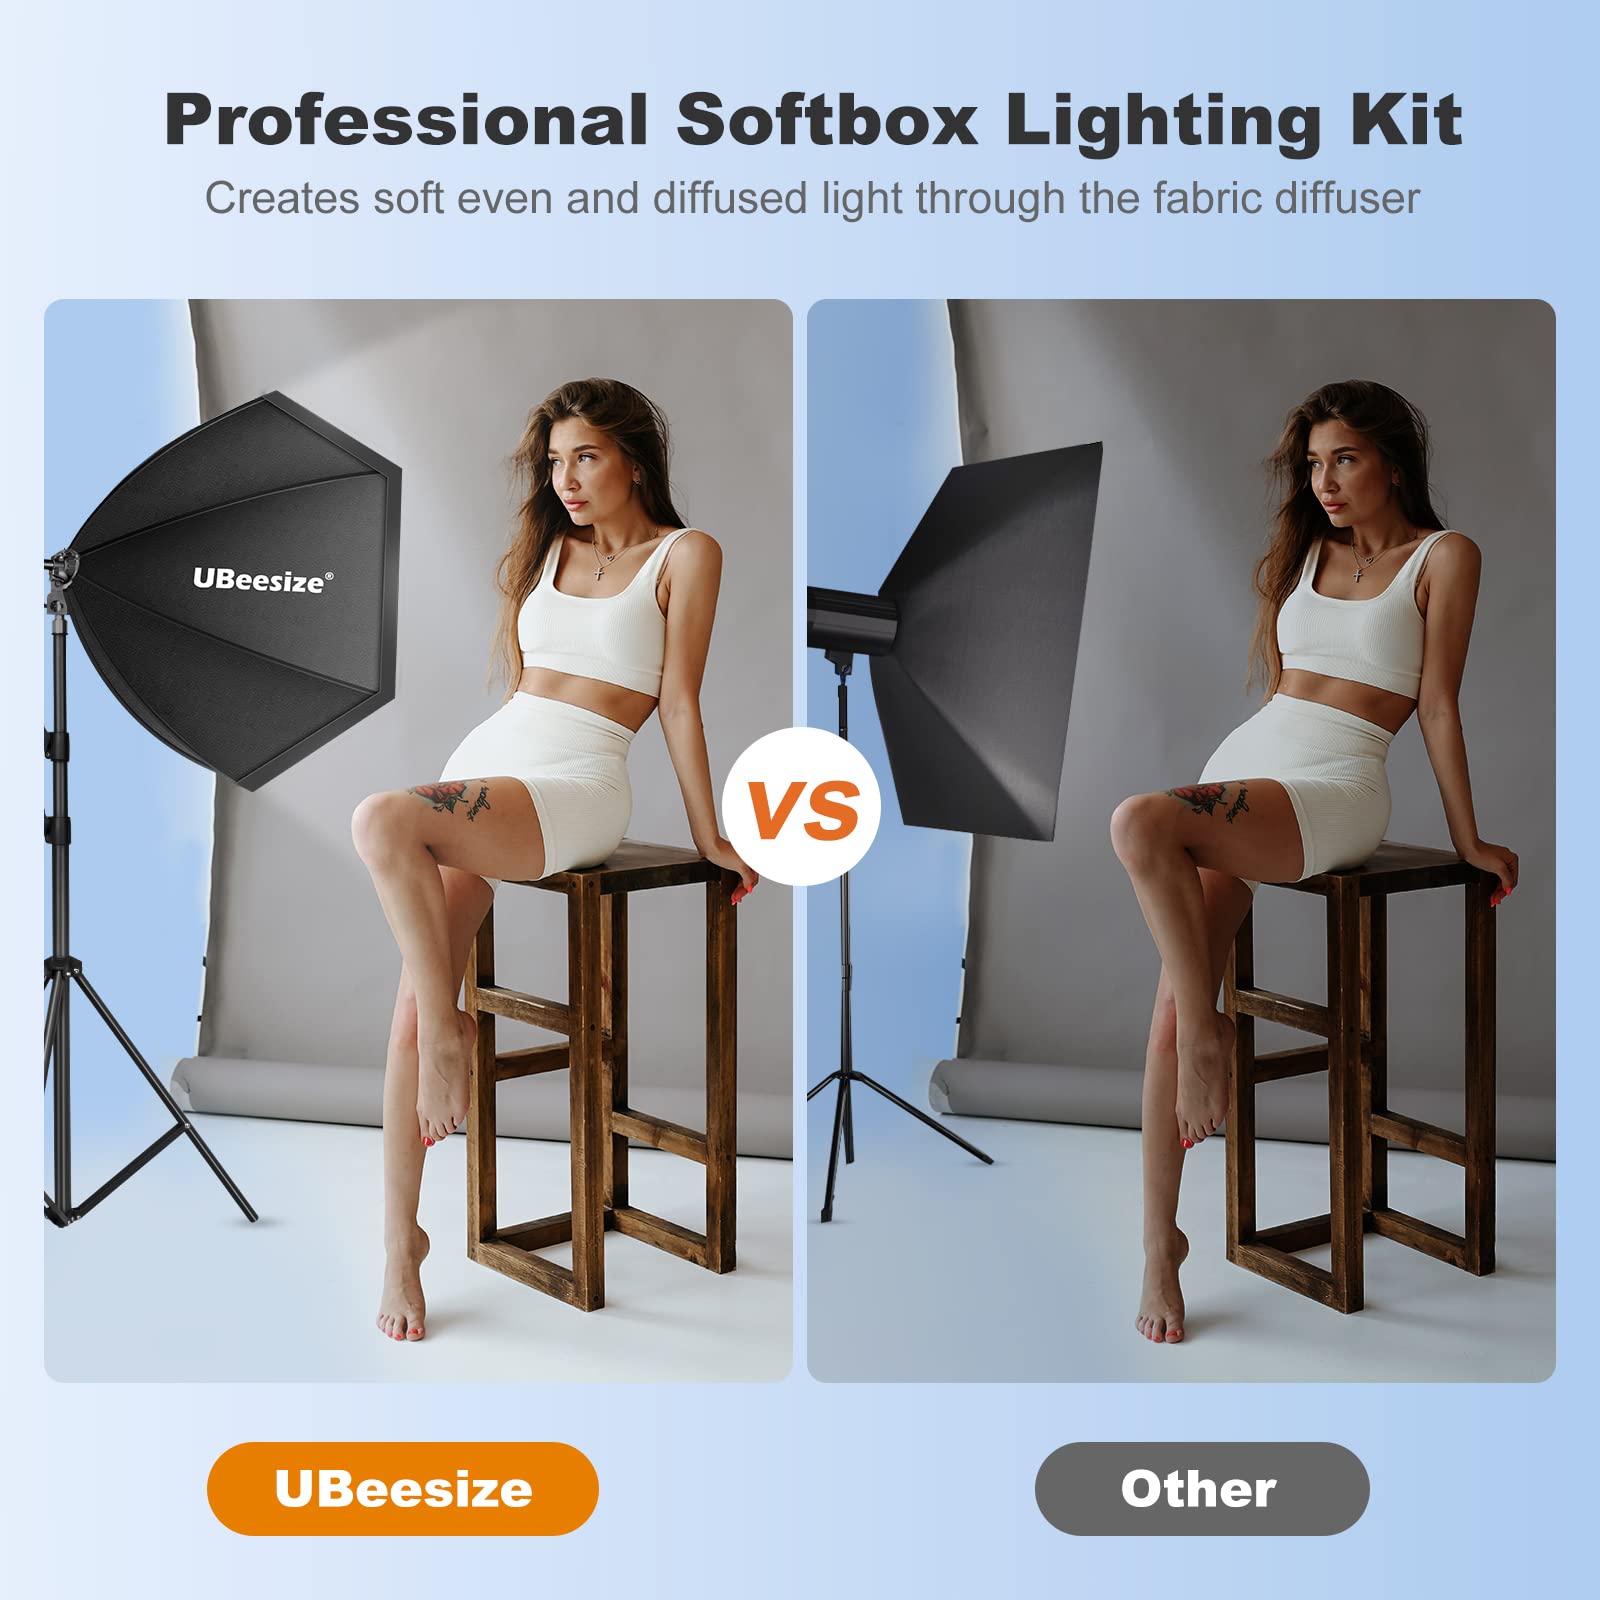 UBeesize Softbox Photography Lighting Kit, 30” x 30” Continuous Lighting Kit with 2pcs 40W E27 Socket 6500K Bulbs, Professional Photo Studio Lighting for Video Recording, Portrait Shooting